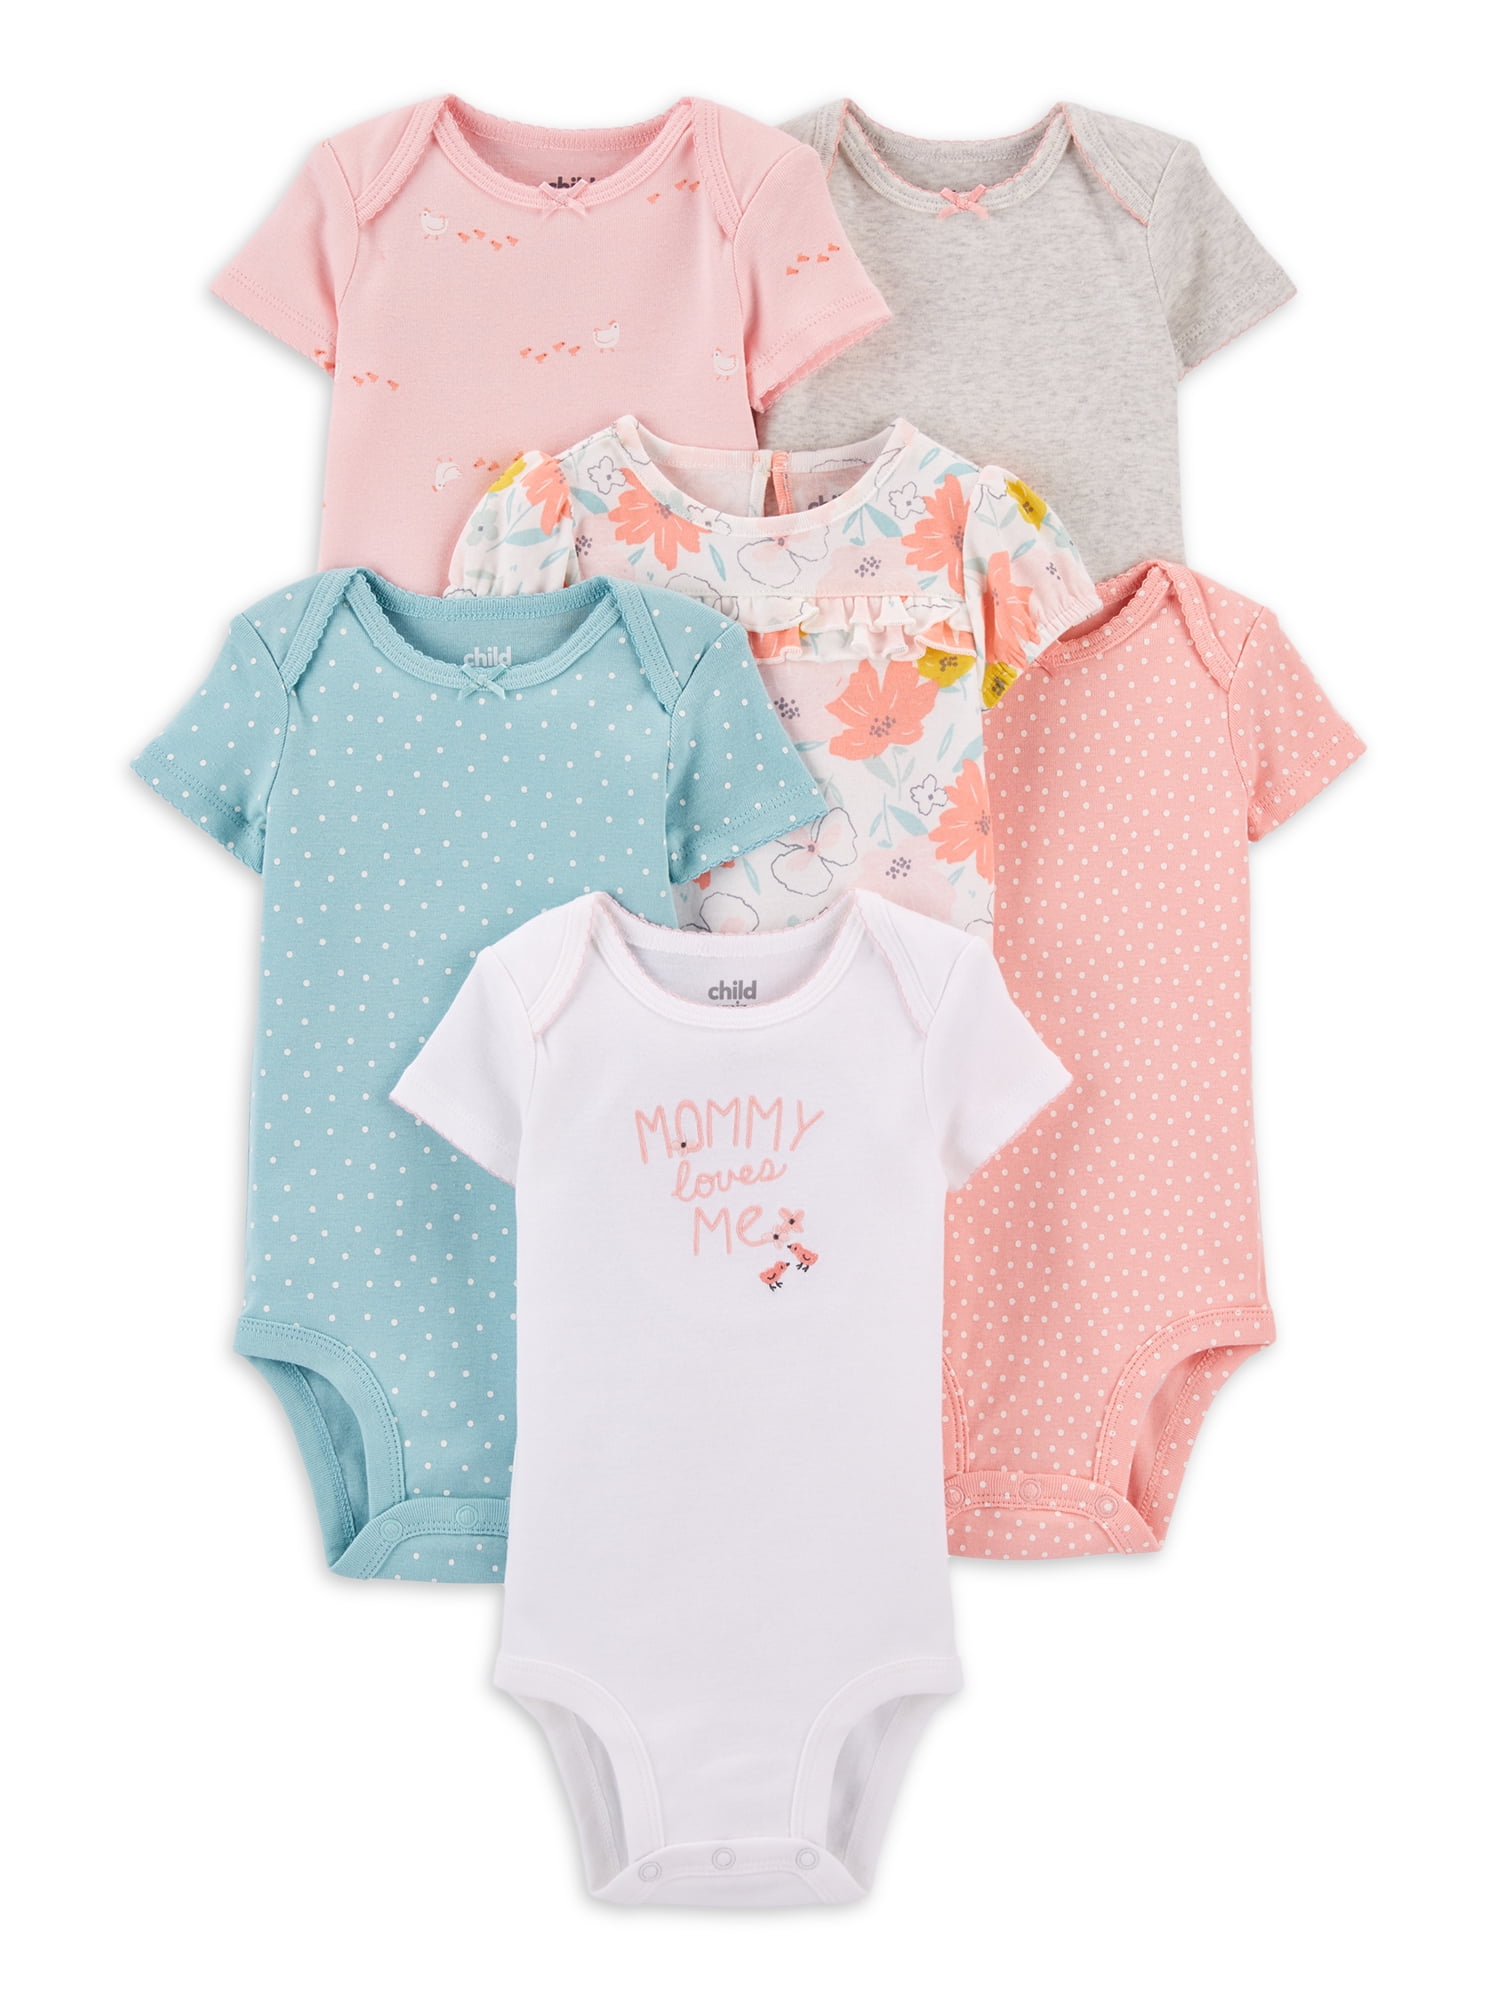 New Carter's Baby Girls Infants Long Sleeves 4 Pack Bodysuits Set Choose Size 